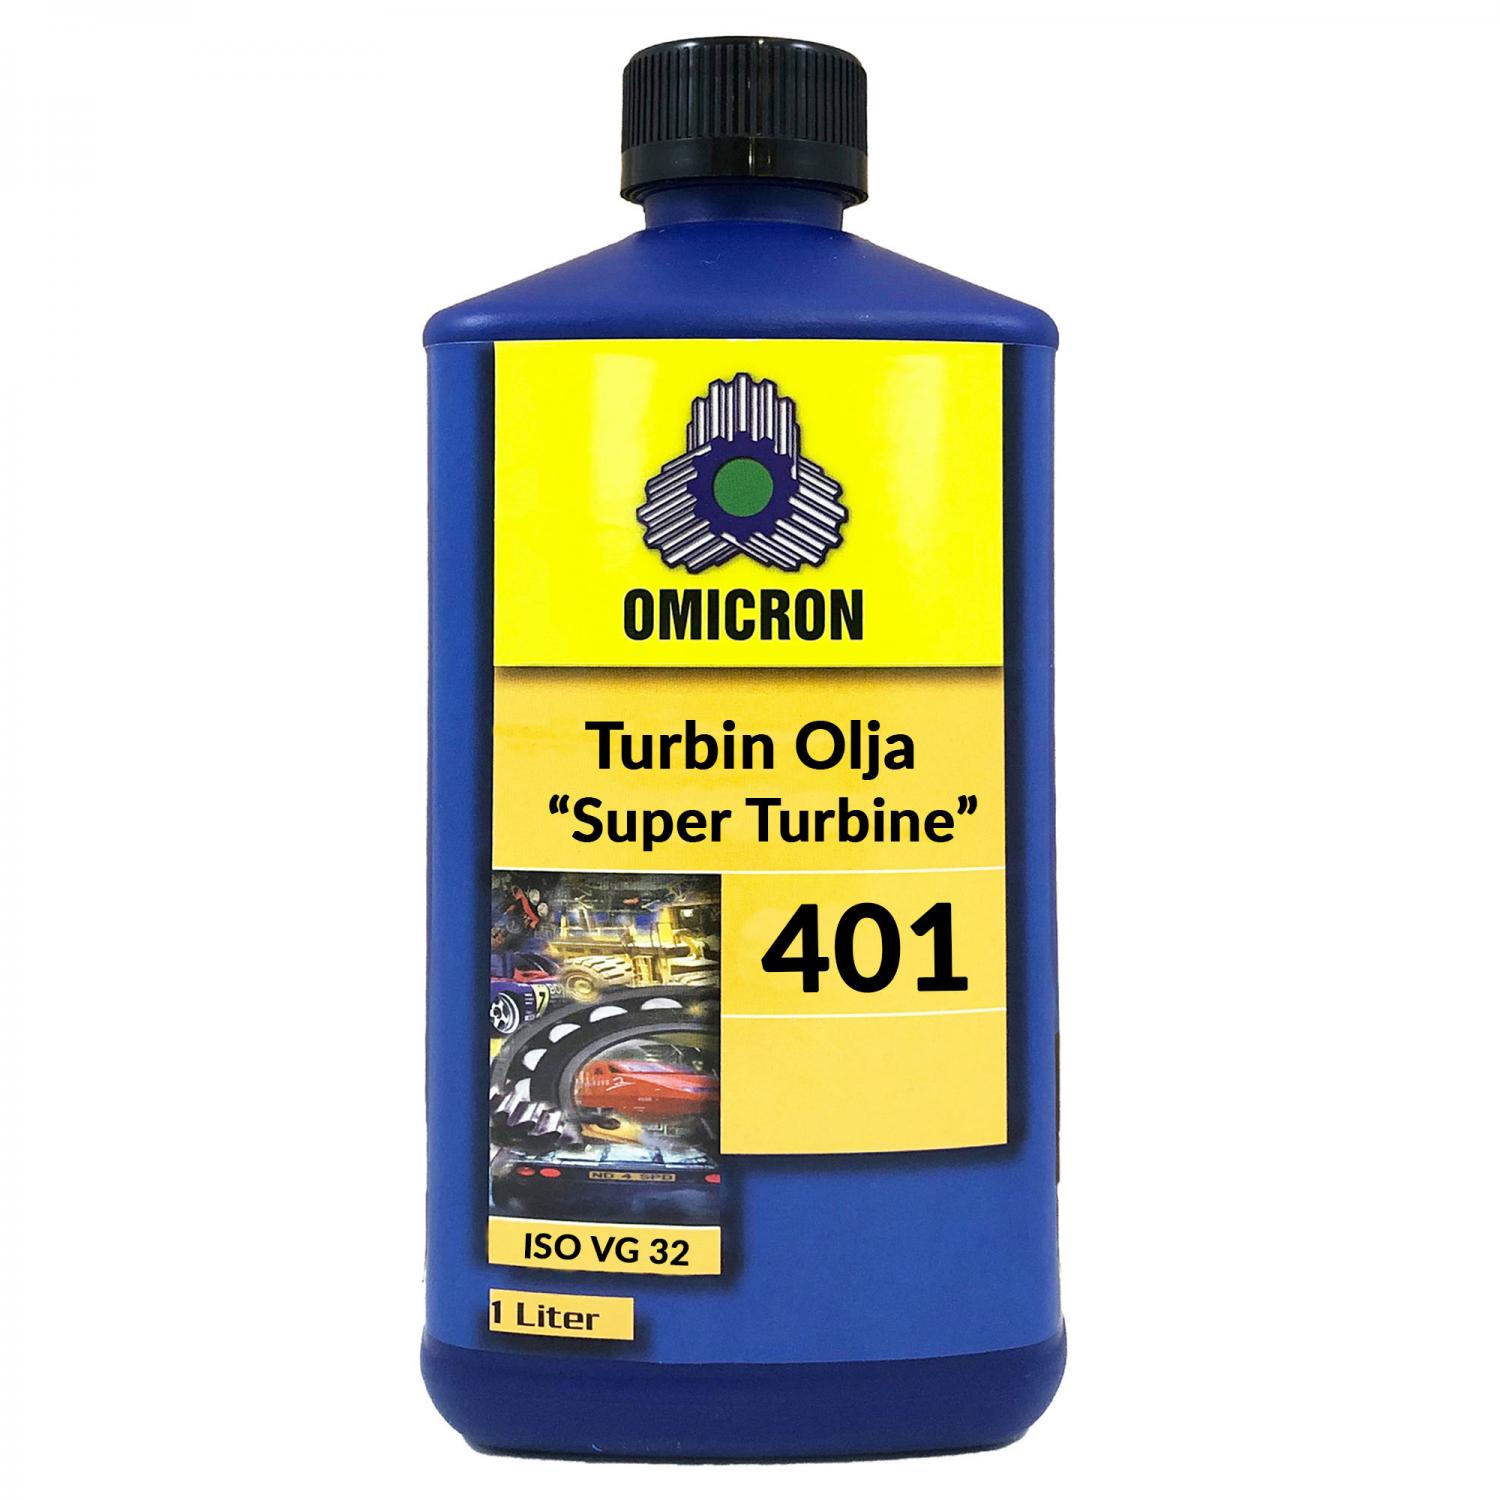 Omicron 401 ISO VG 32 Turbin Olja 1L